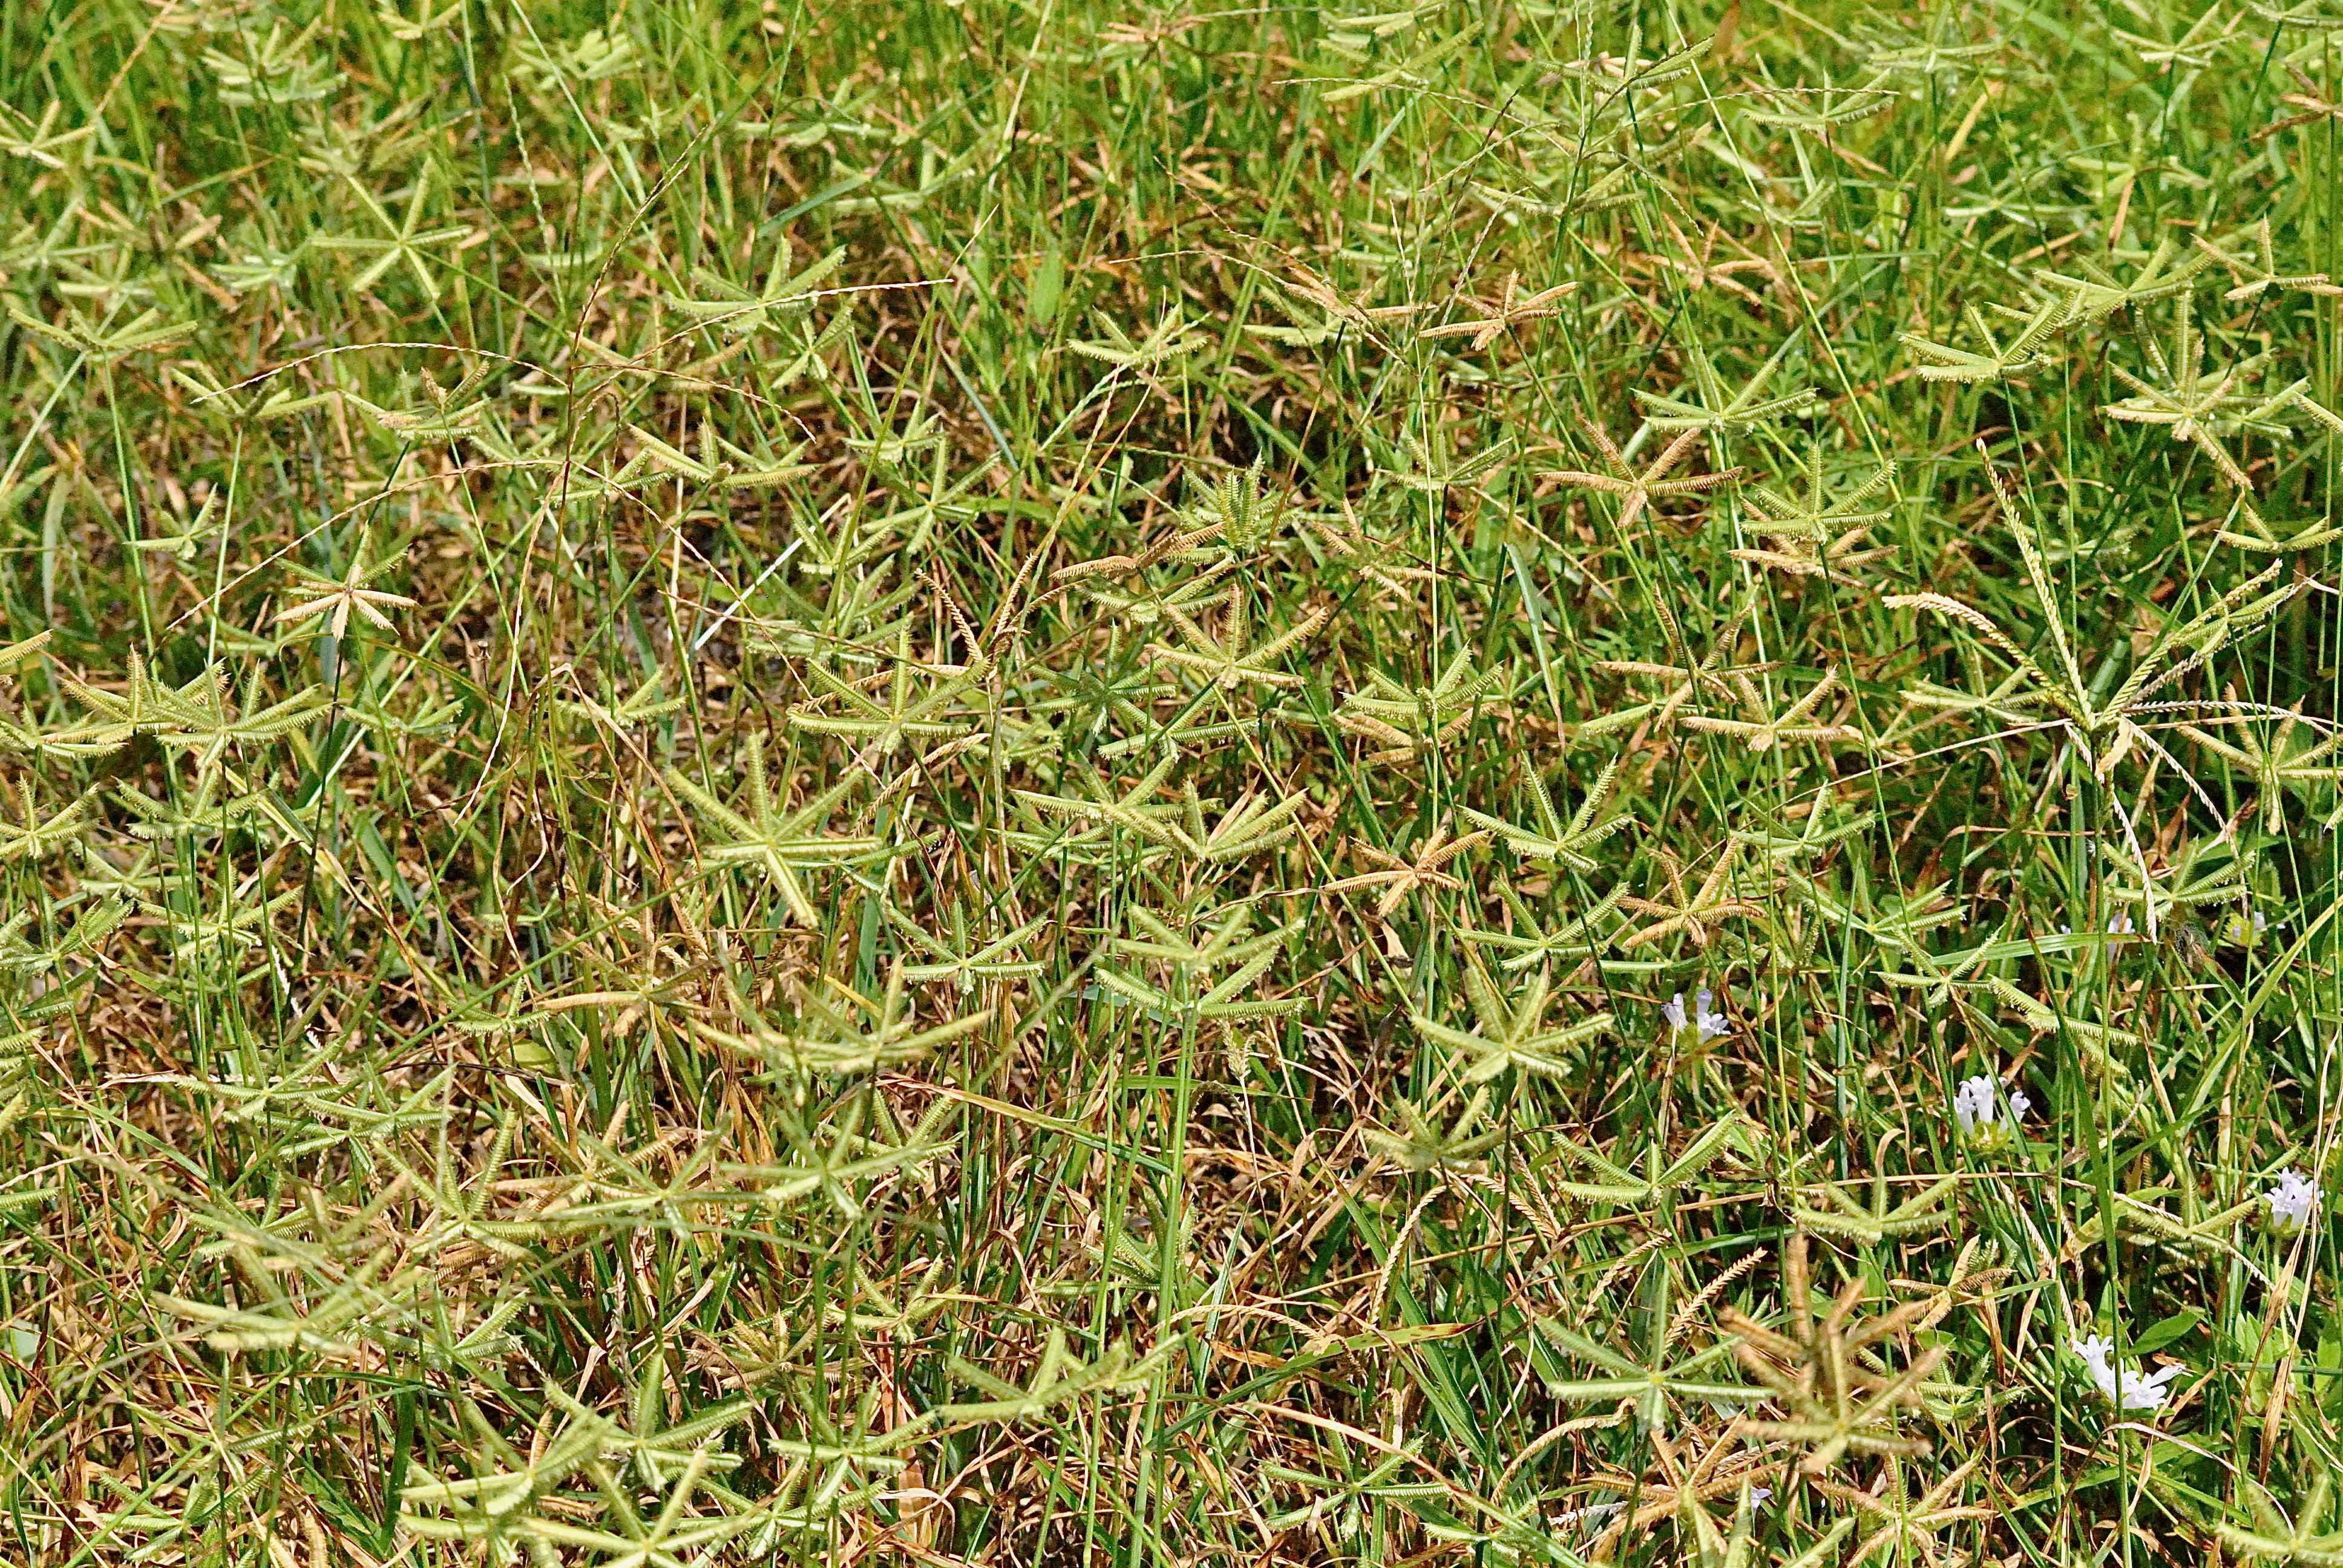 Crow's foot grass